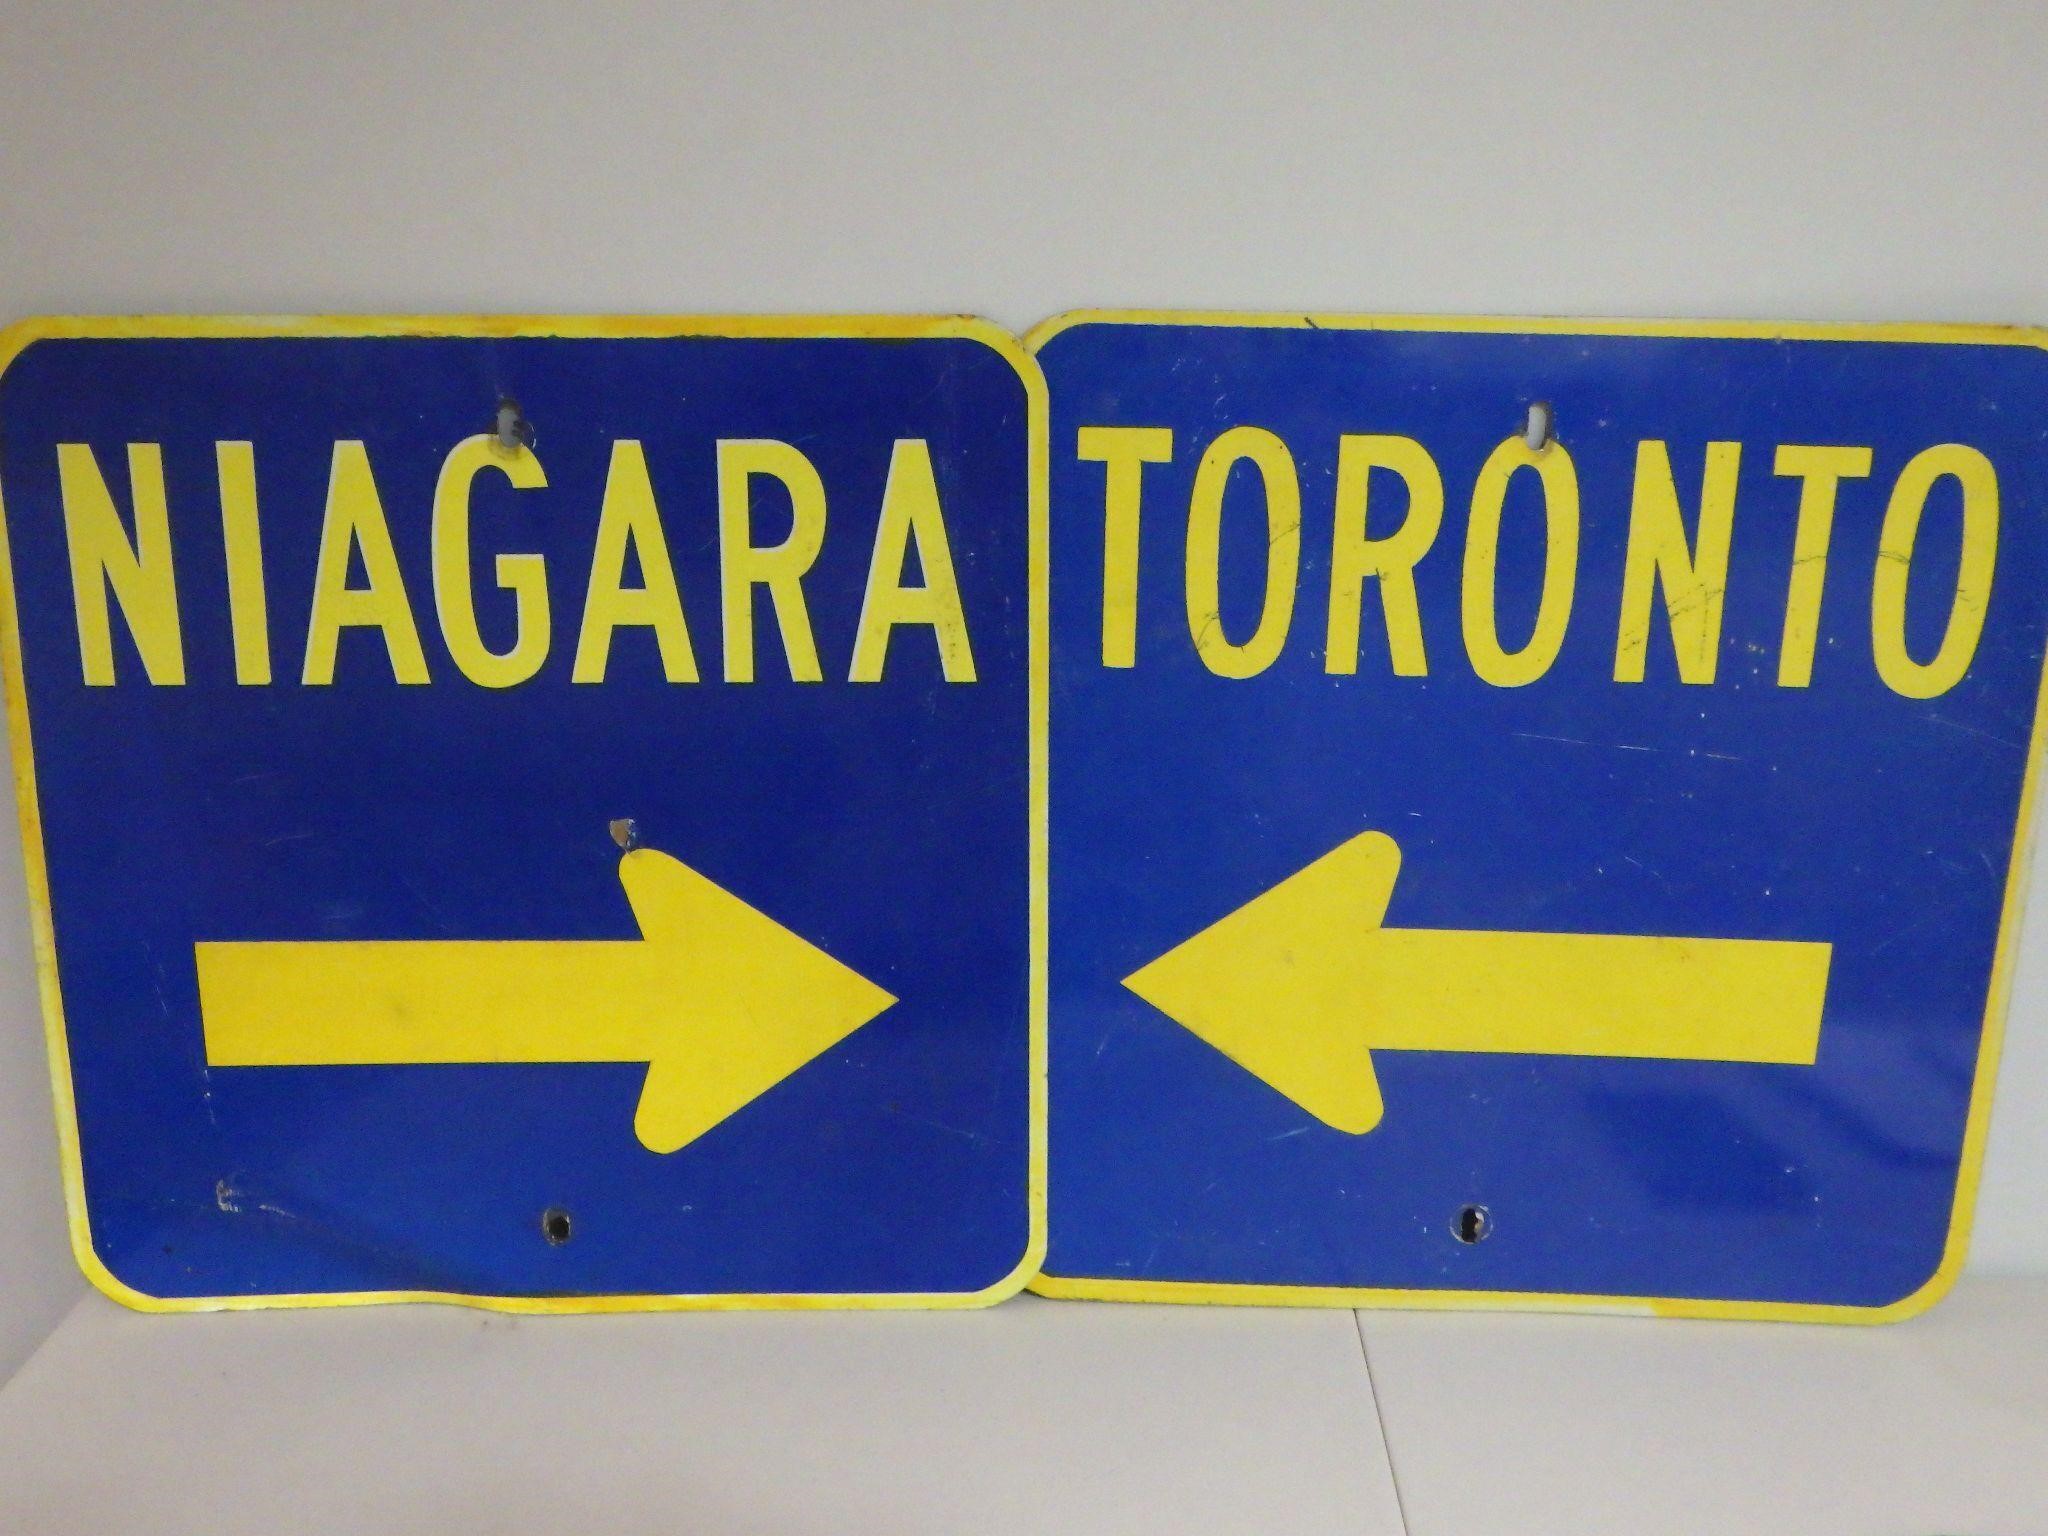 Old Niagara & Toronto Metal Signs